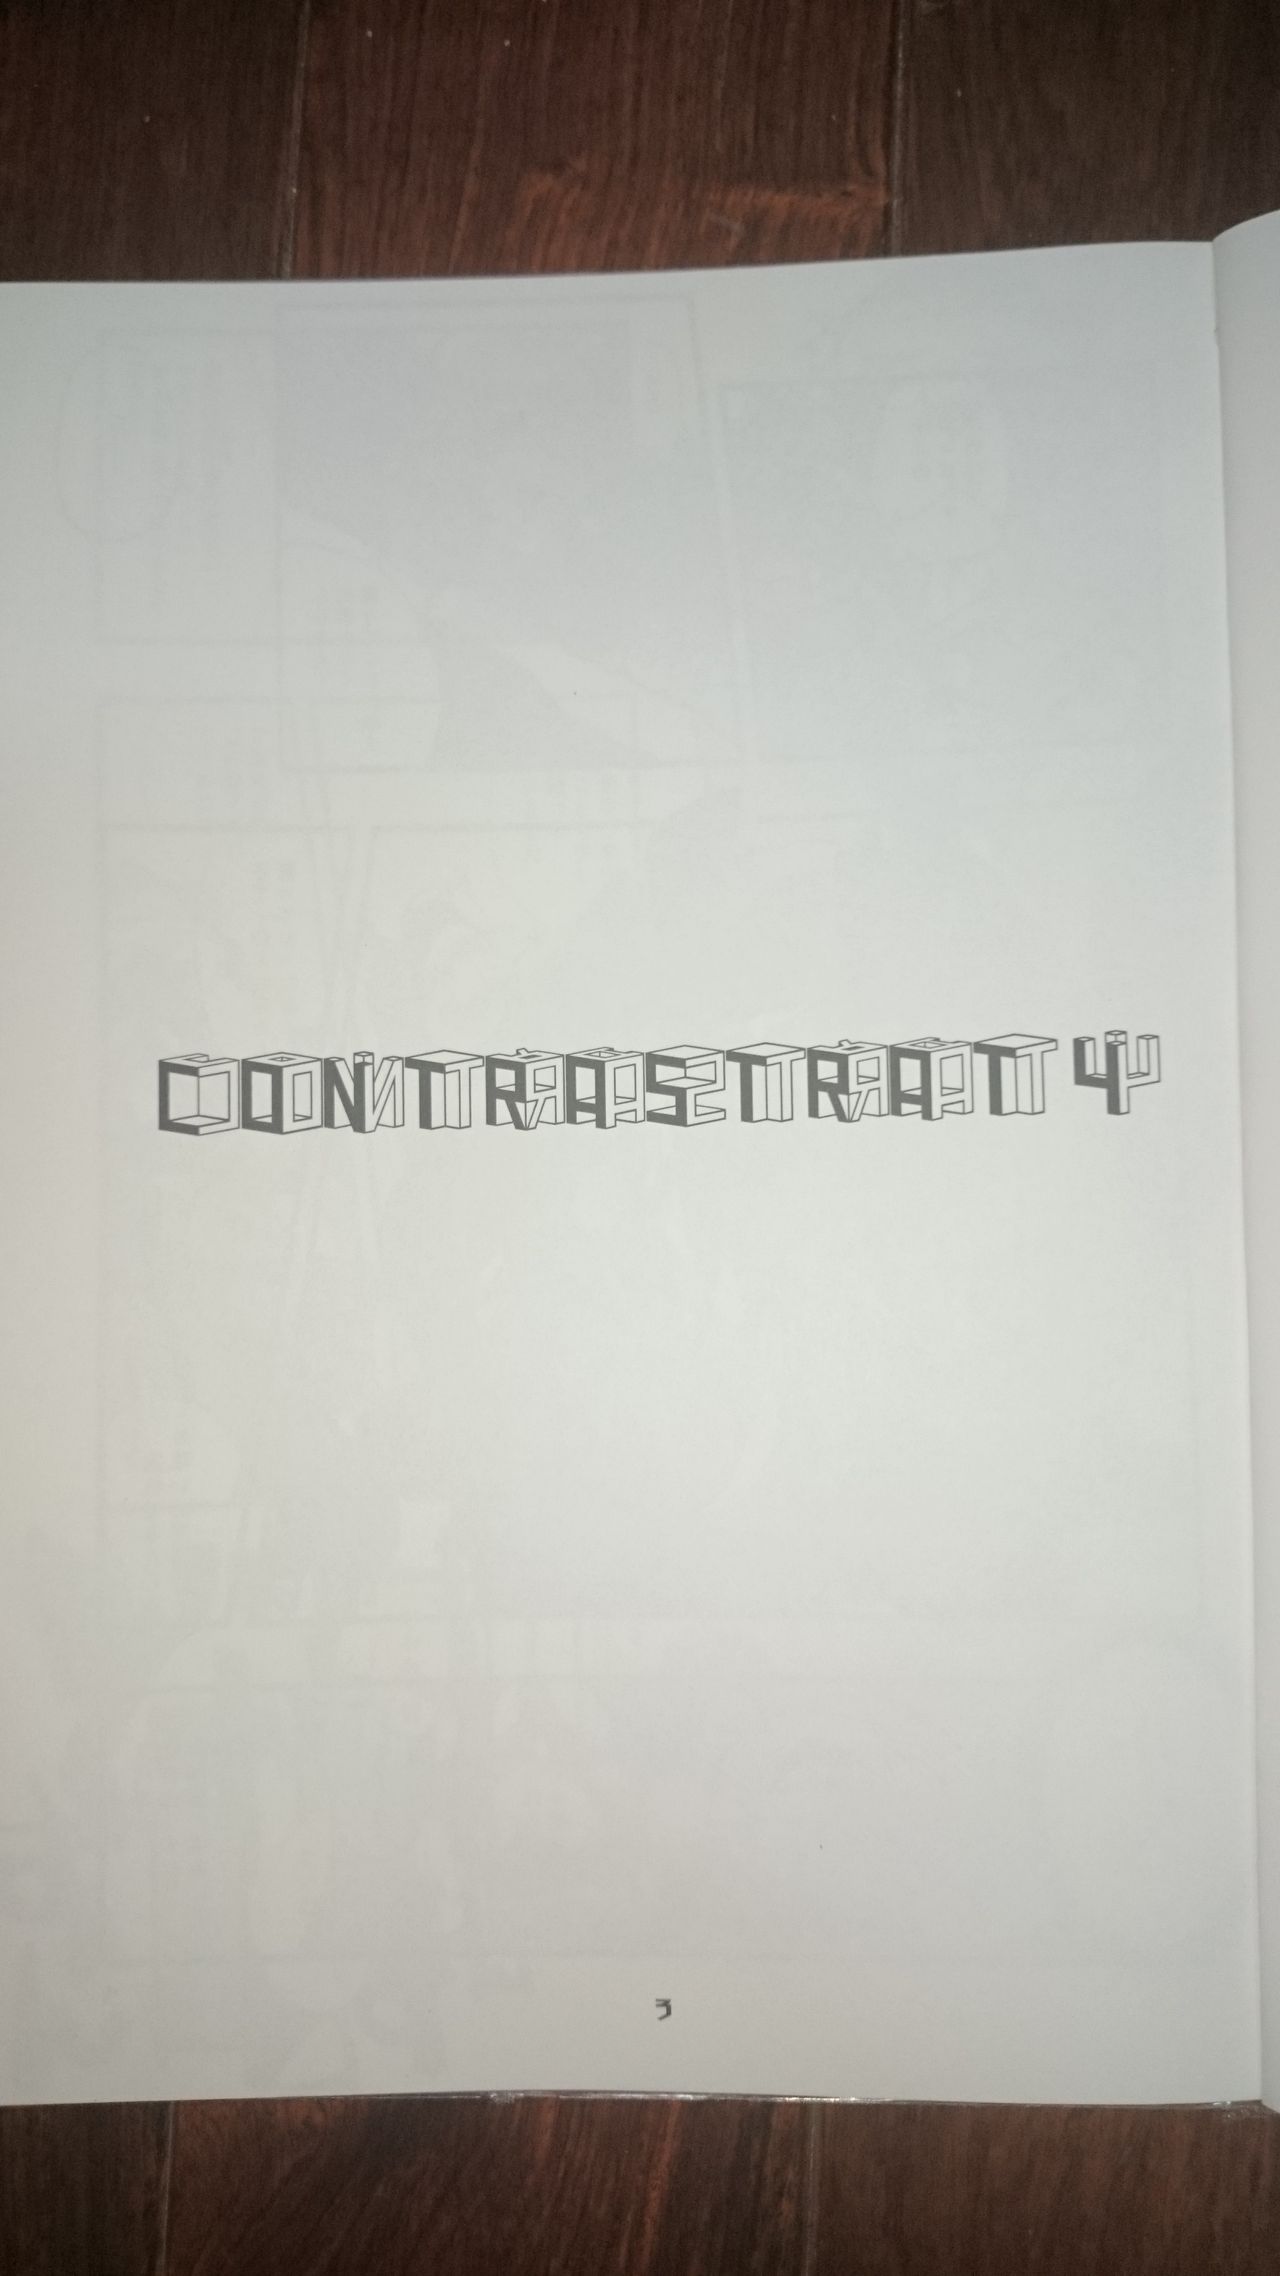 CONTRASTRAST 4 コントラストラスト4